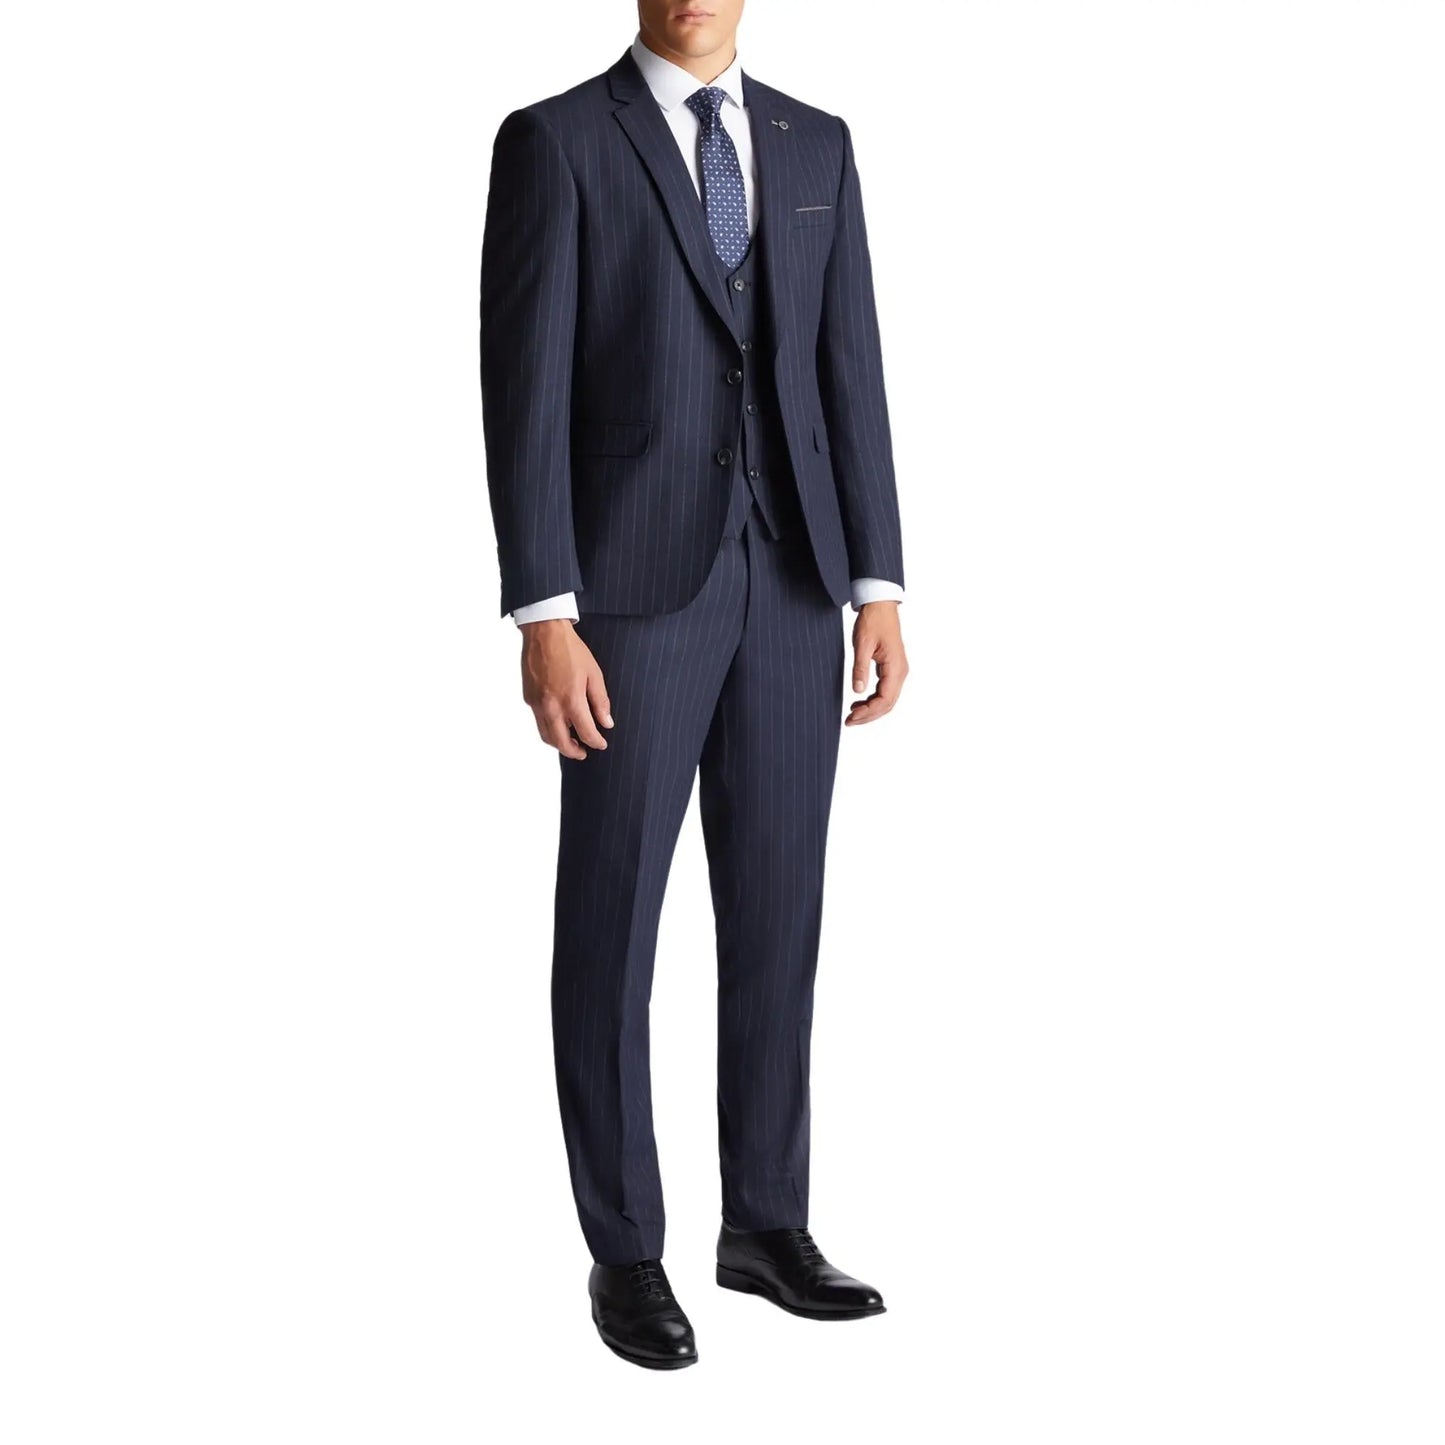 Buy Remus Uomo Lucian Pinstripe Suit Jacket - Navy | Suit Jacketss at Woven Durham